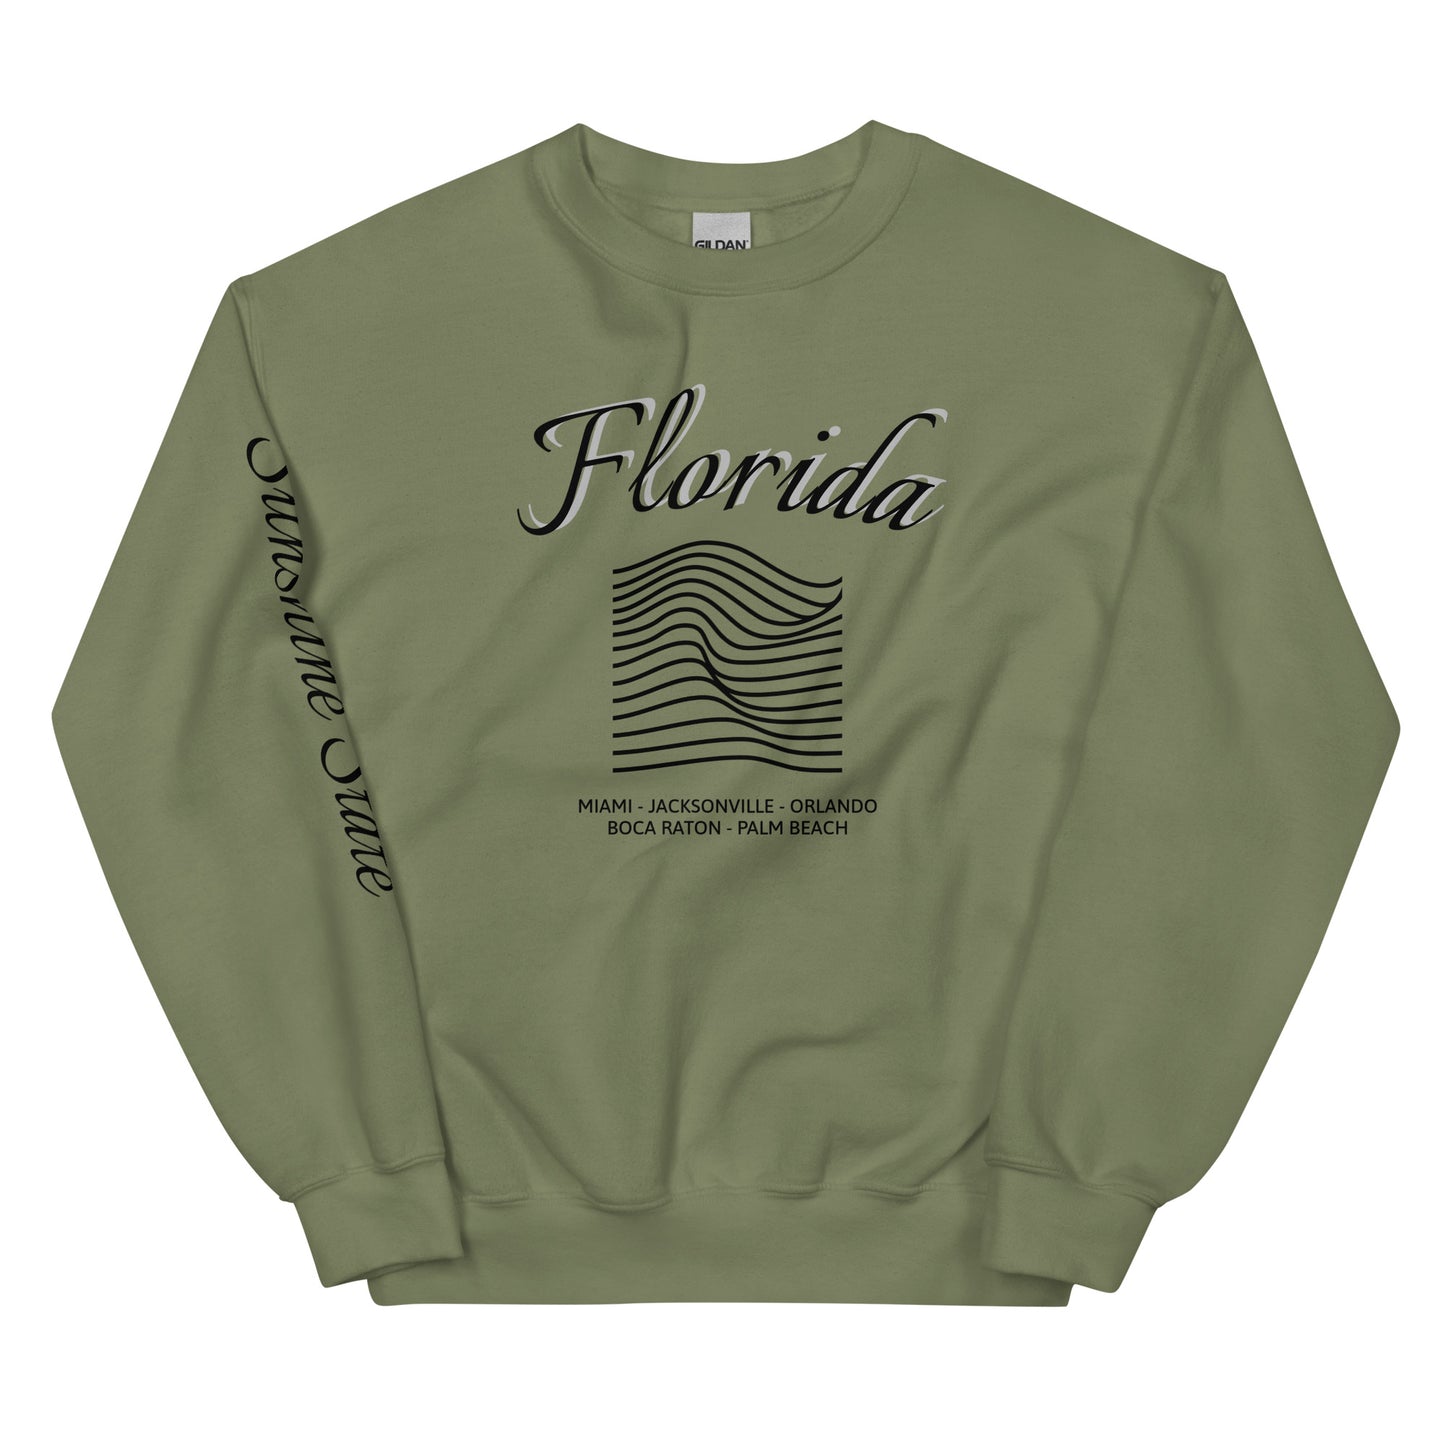 Jacksonville, Miami, Orlando, Palm Beach, Boca Raton, Unisex Sweatshirt